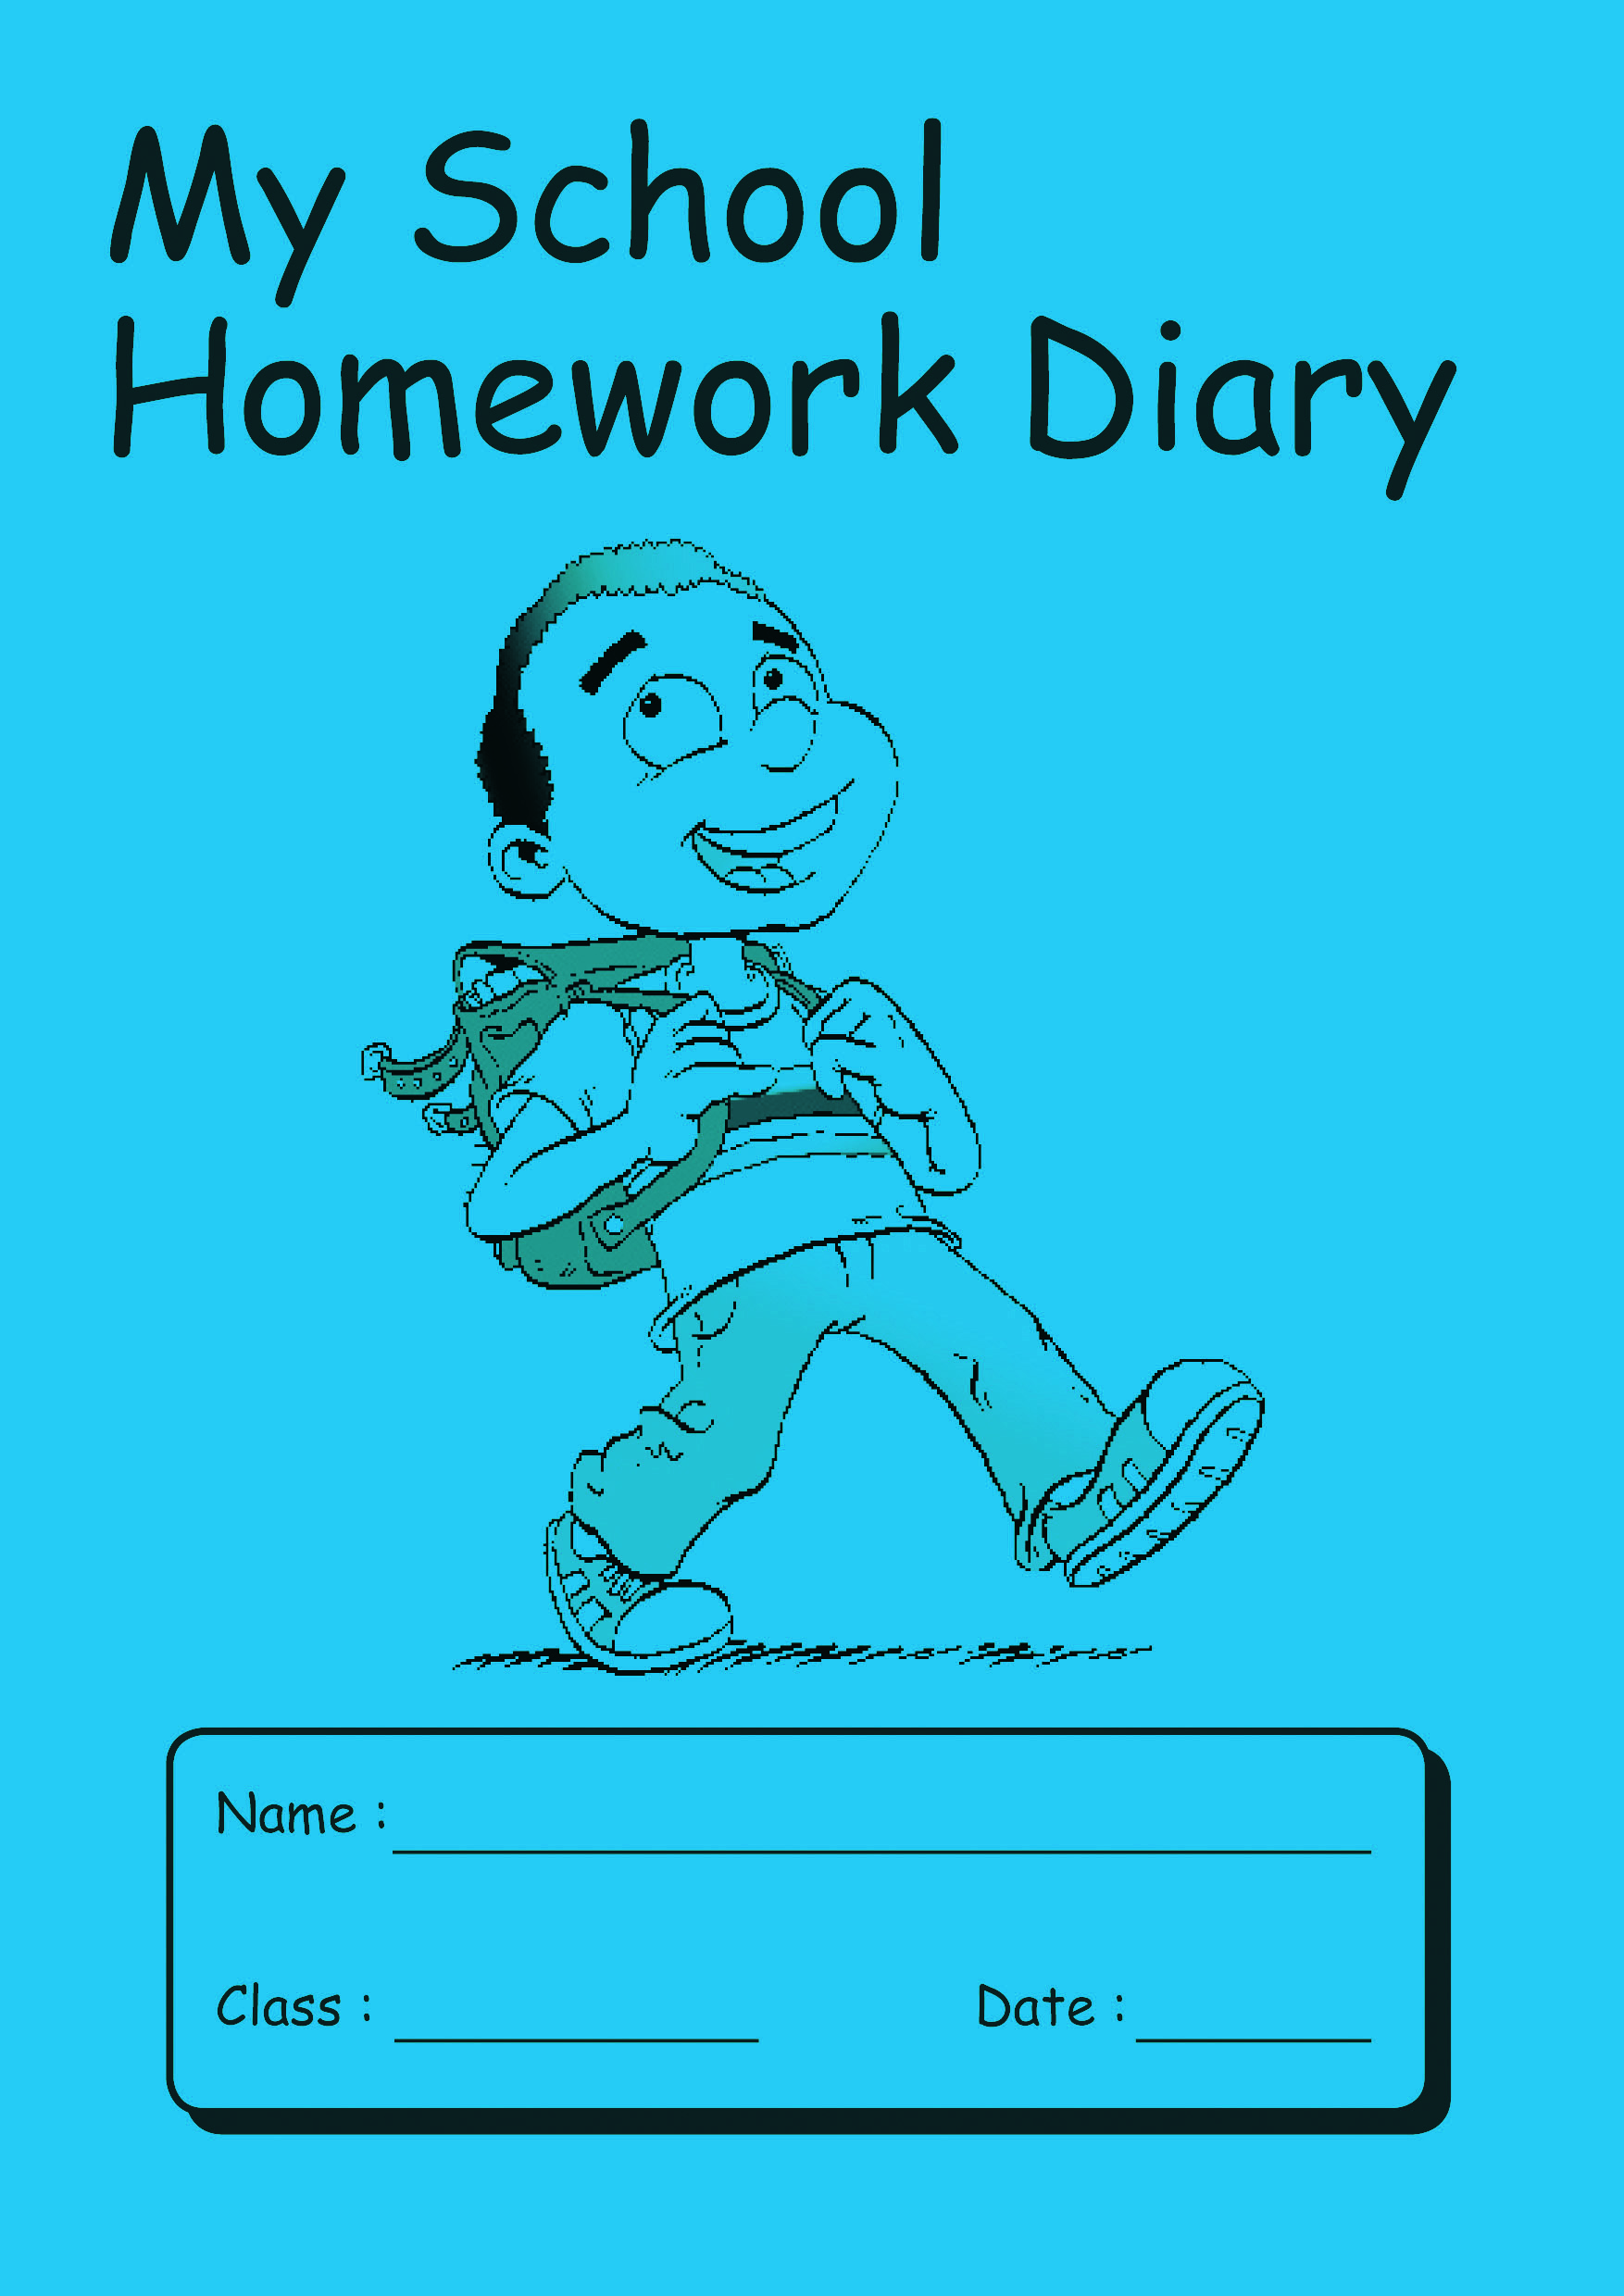 homework diary clipart